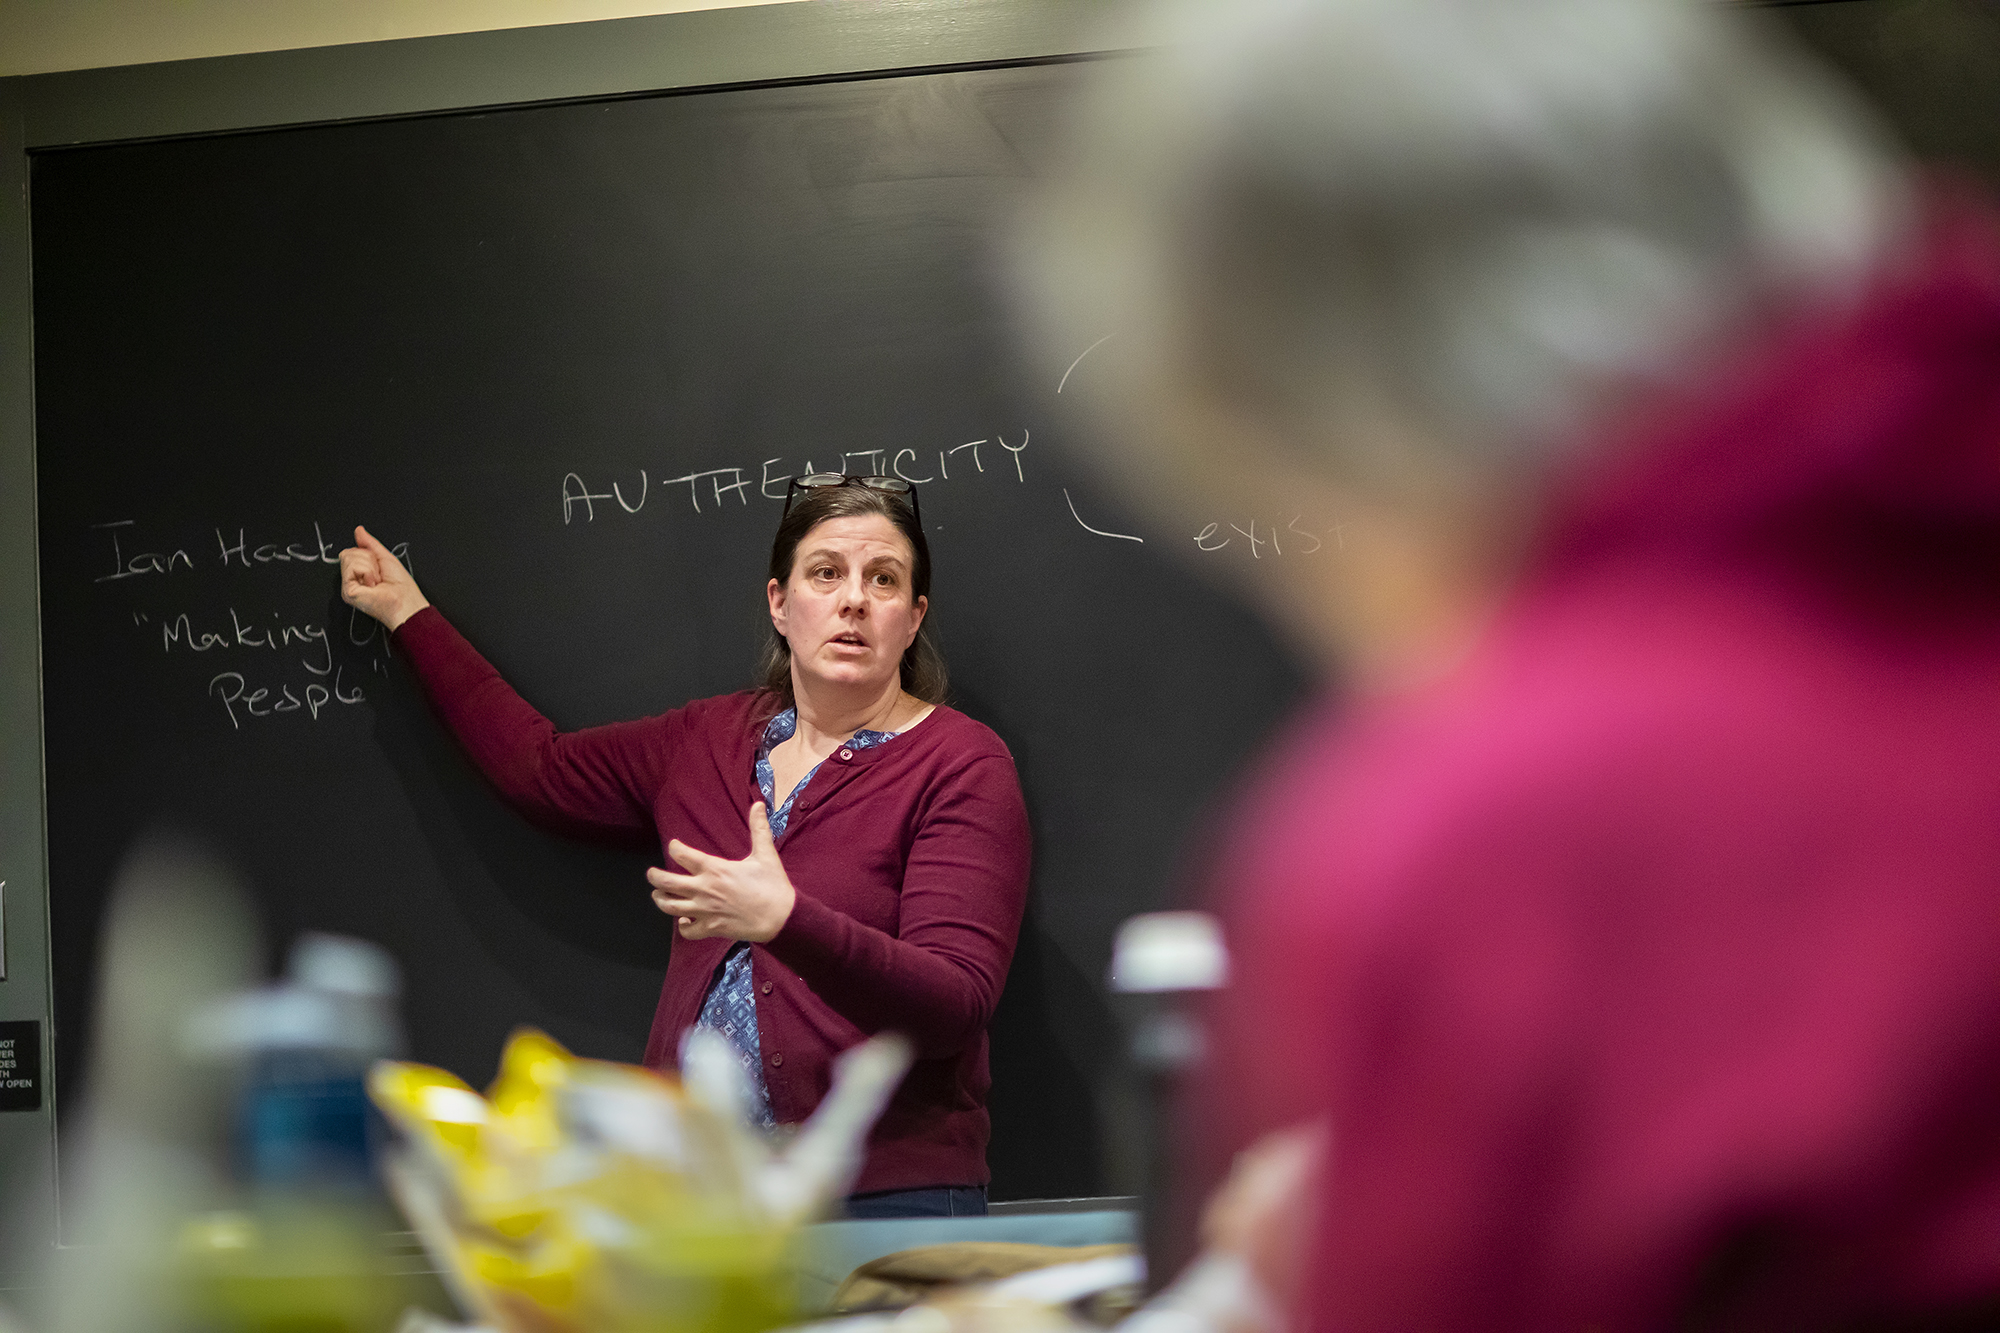 Karen Detlefsen teaching at a blackboard